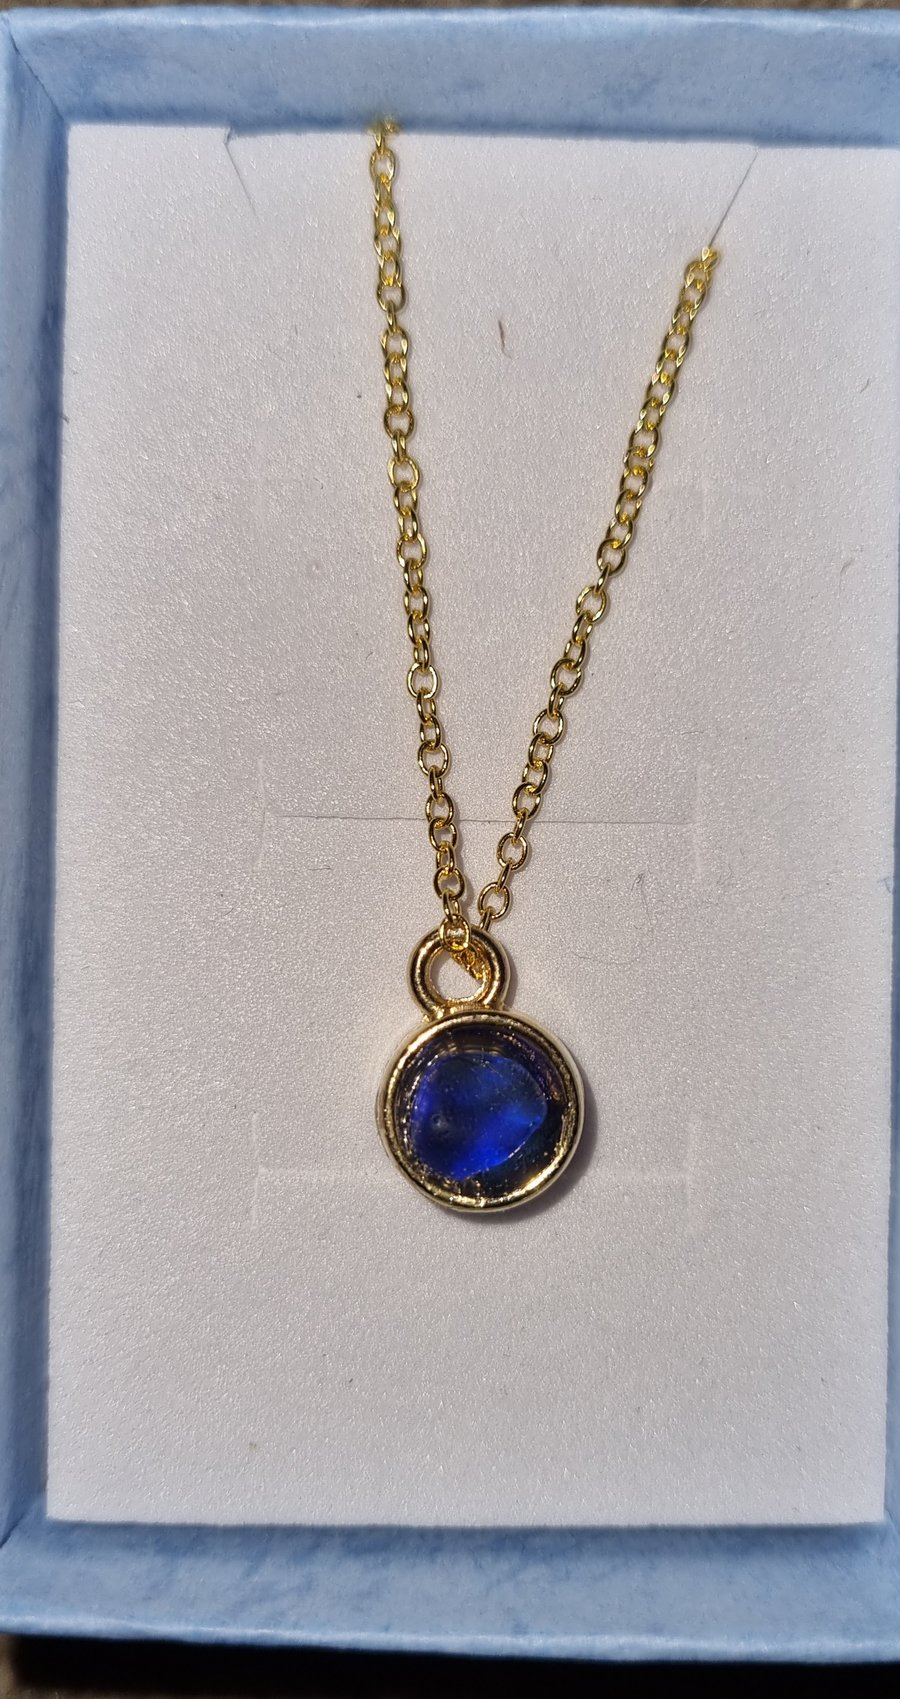 Deep blue seaglass pendant